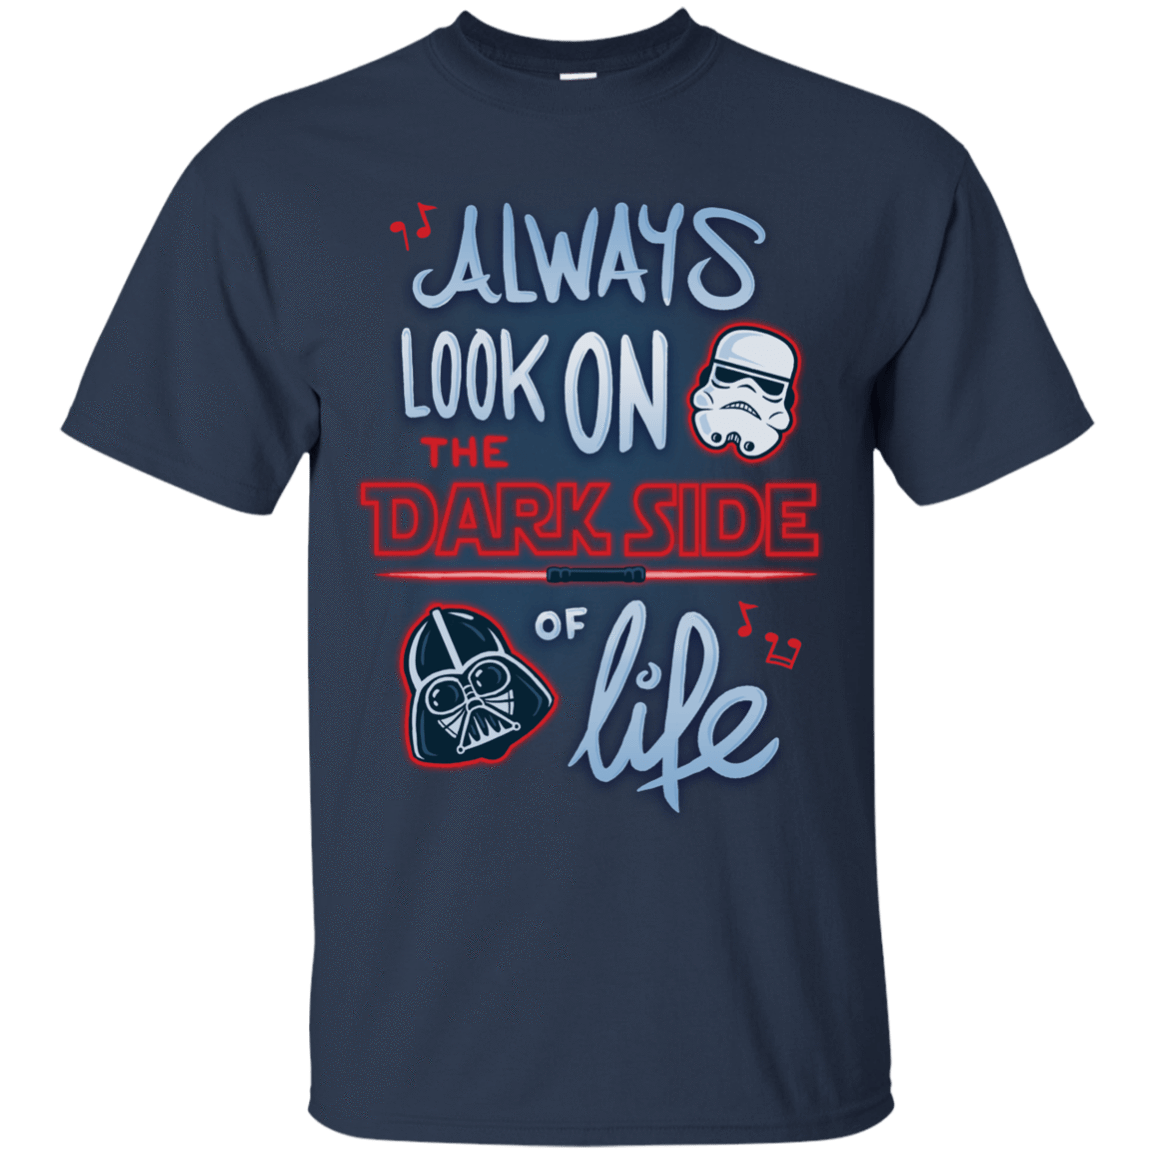 T-Shirts Navy / Small Dark Side of Life T-Shirt